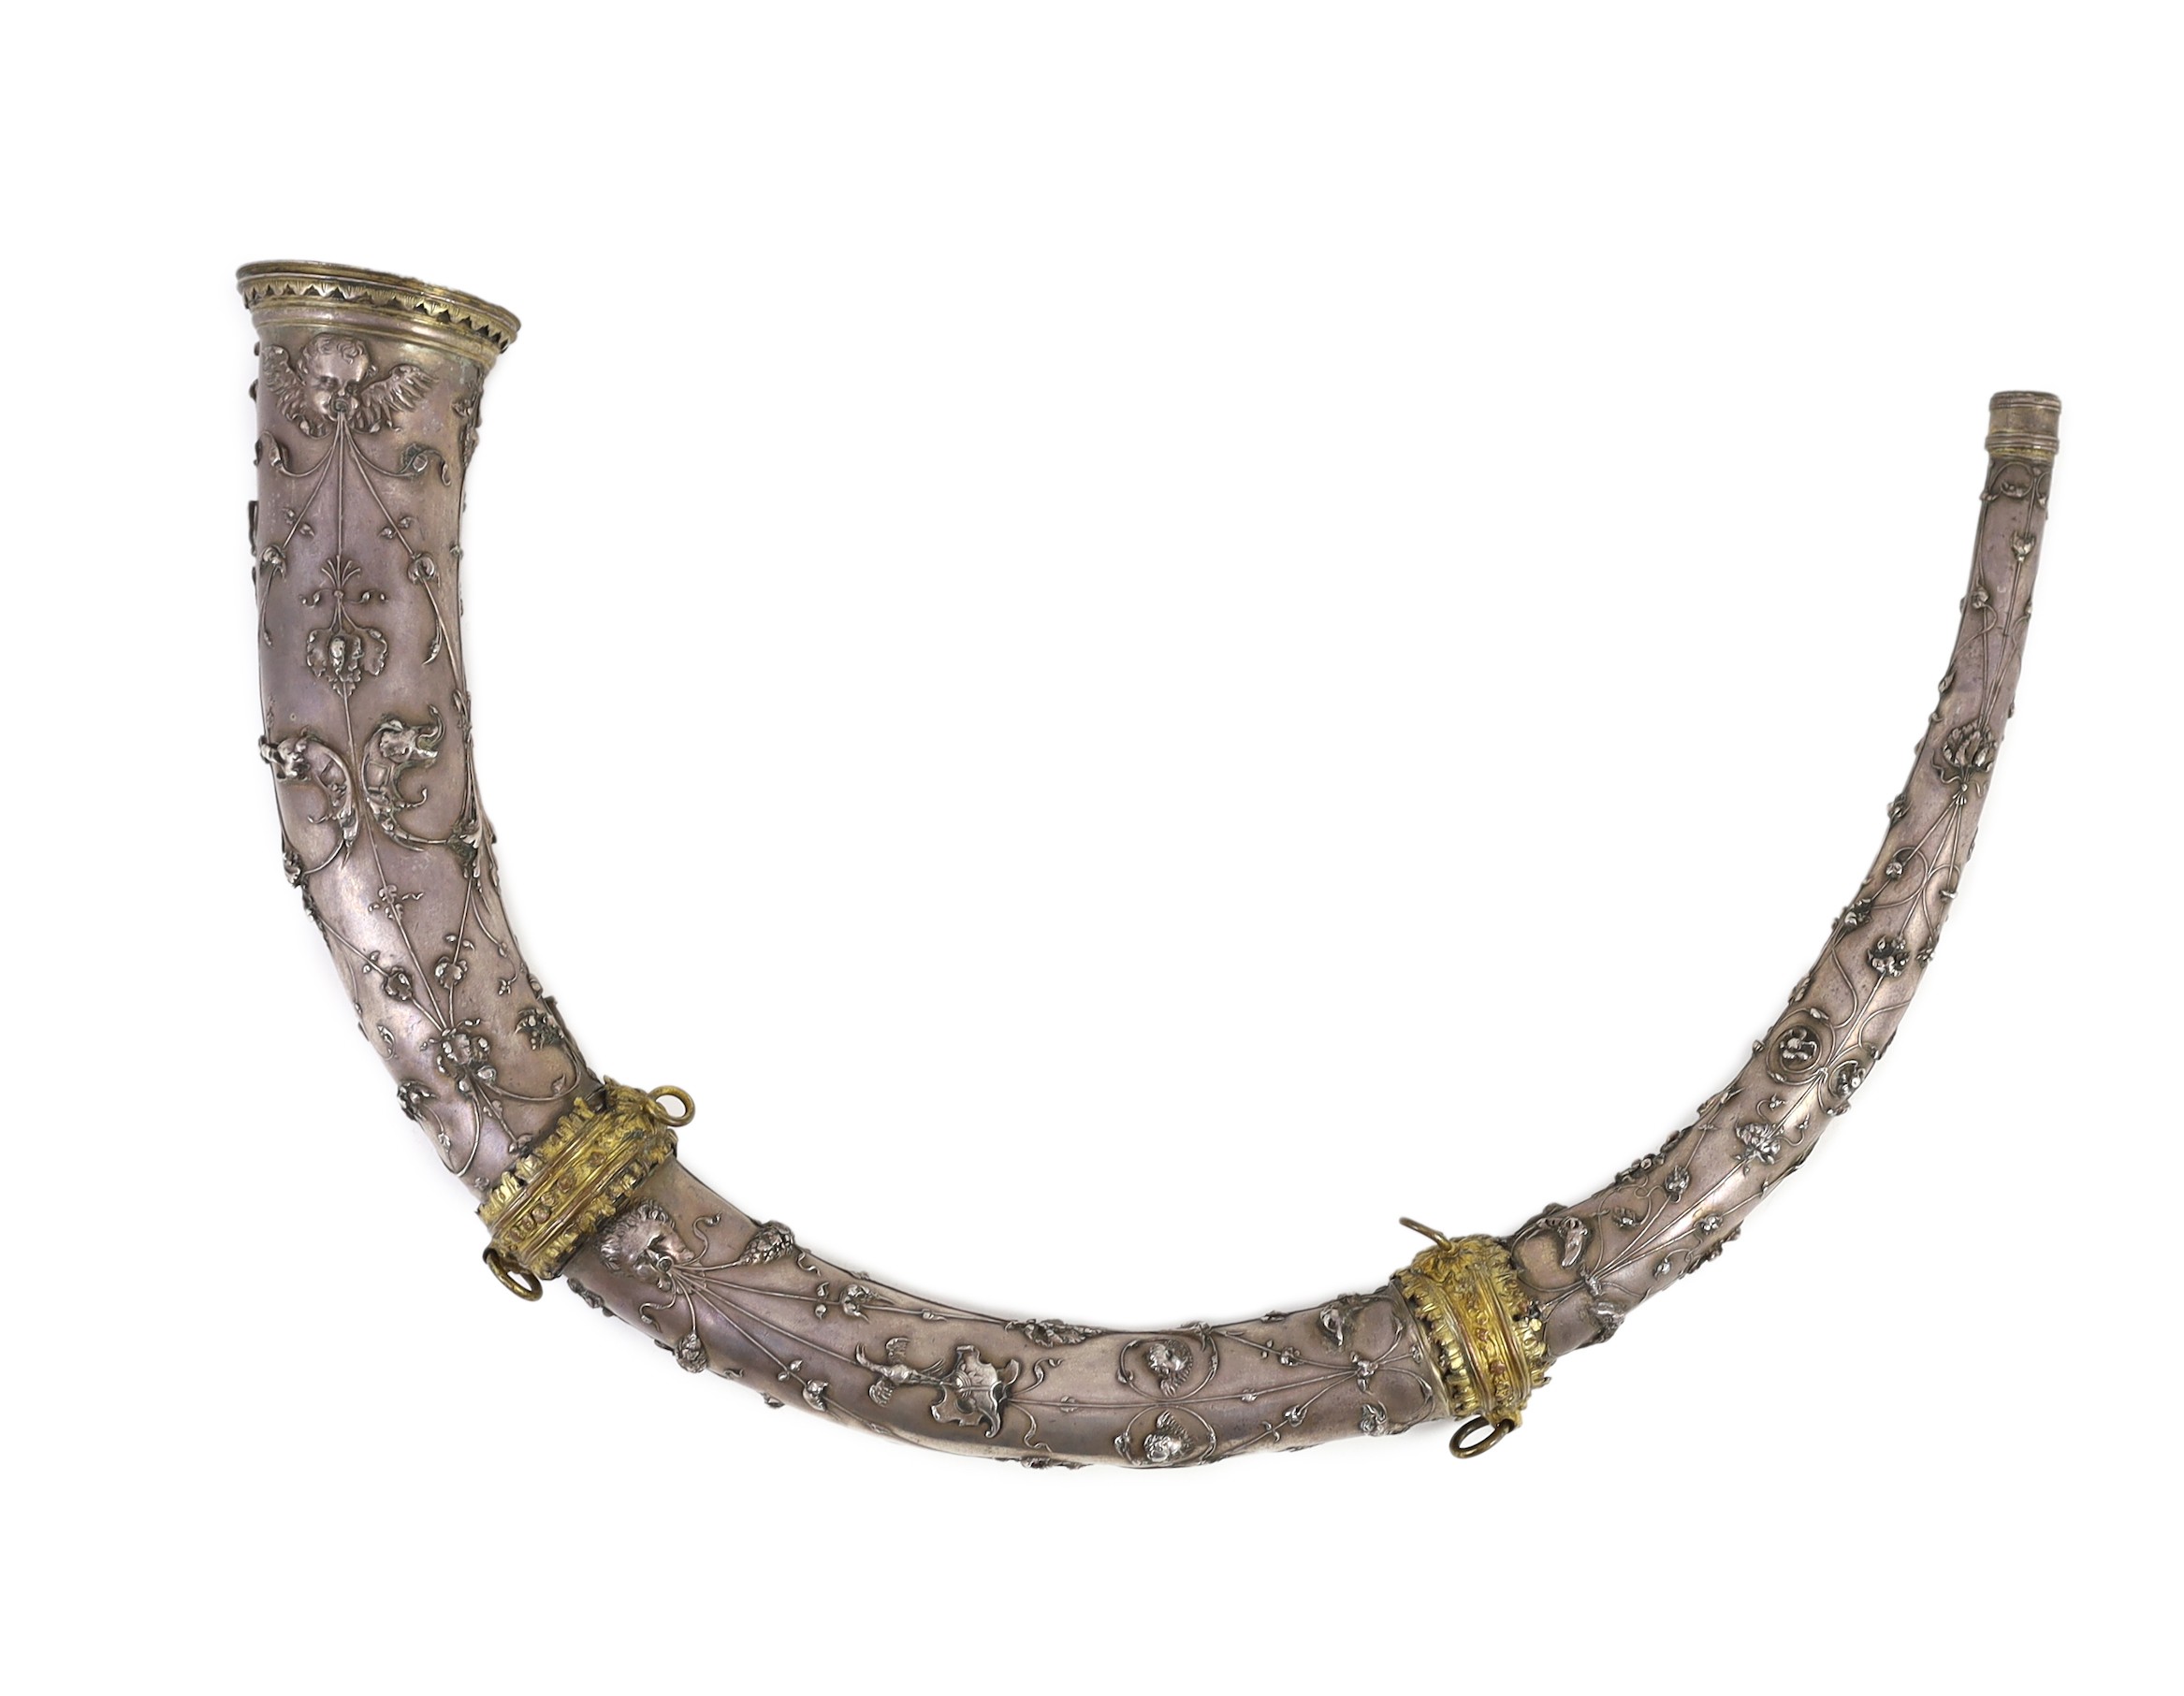 A 19th century Italian white metal hunting horn, length 40cm, depth 26cm